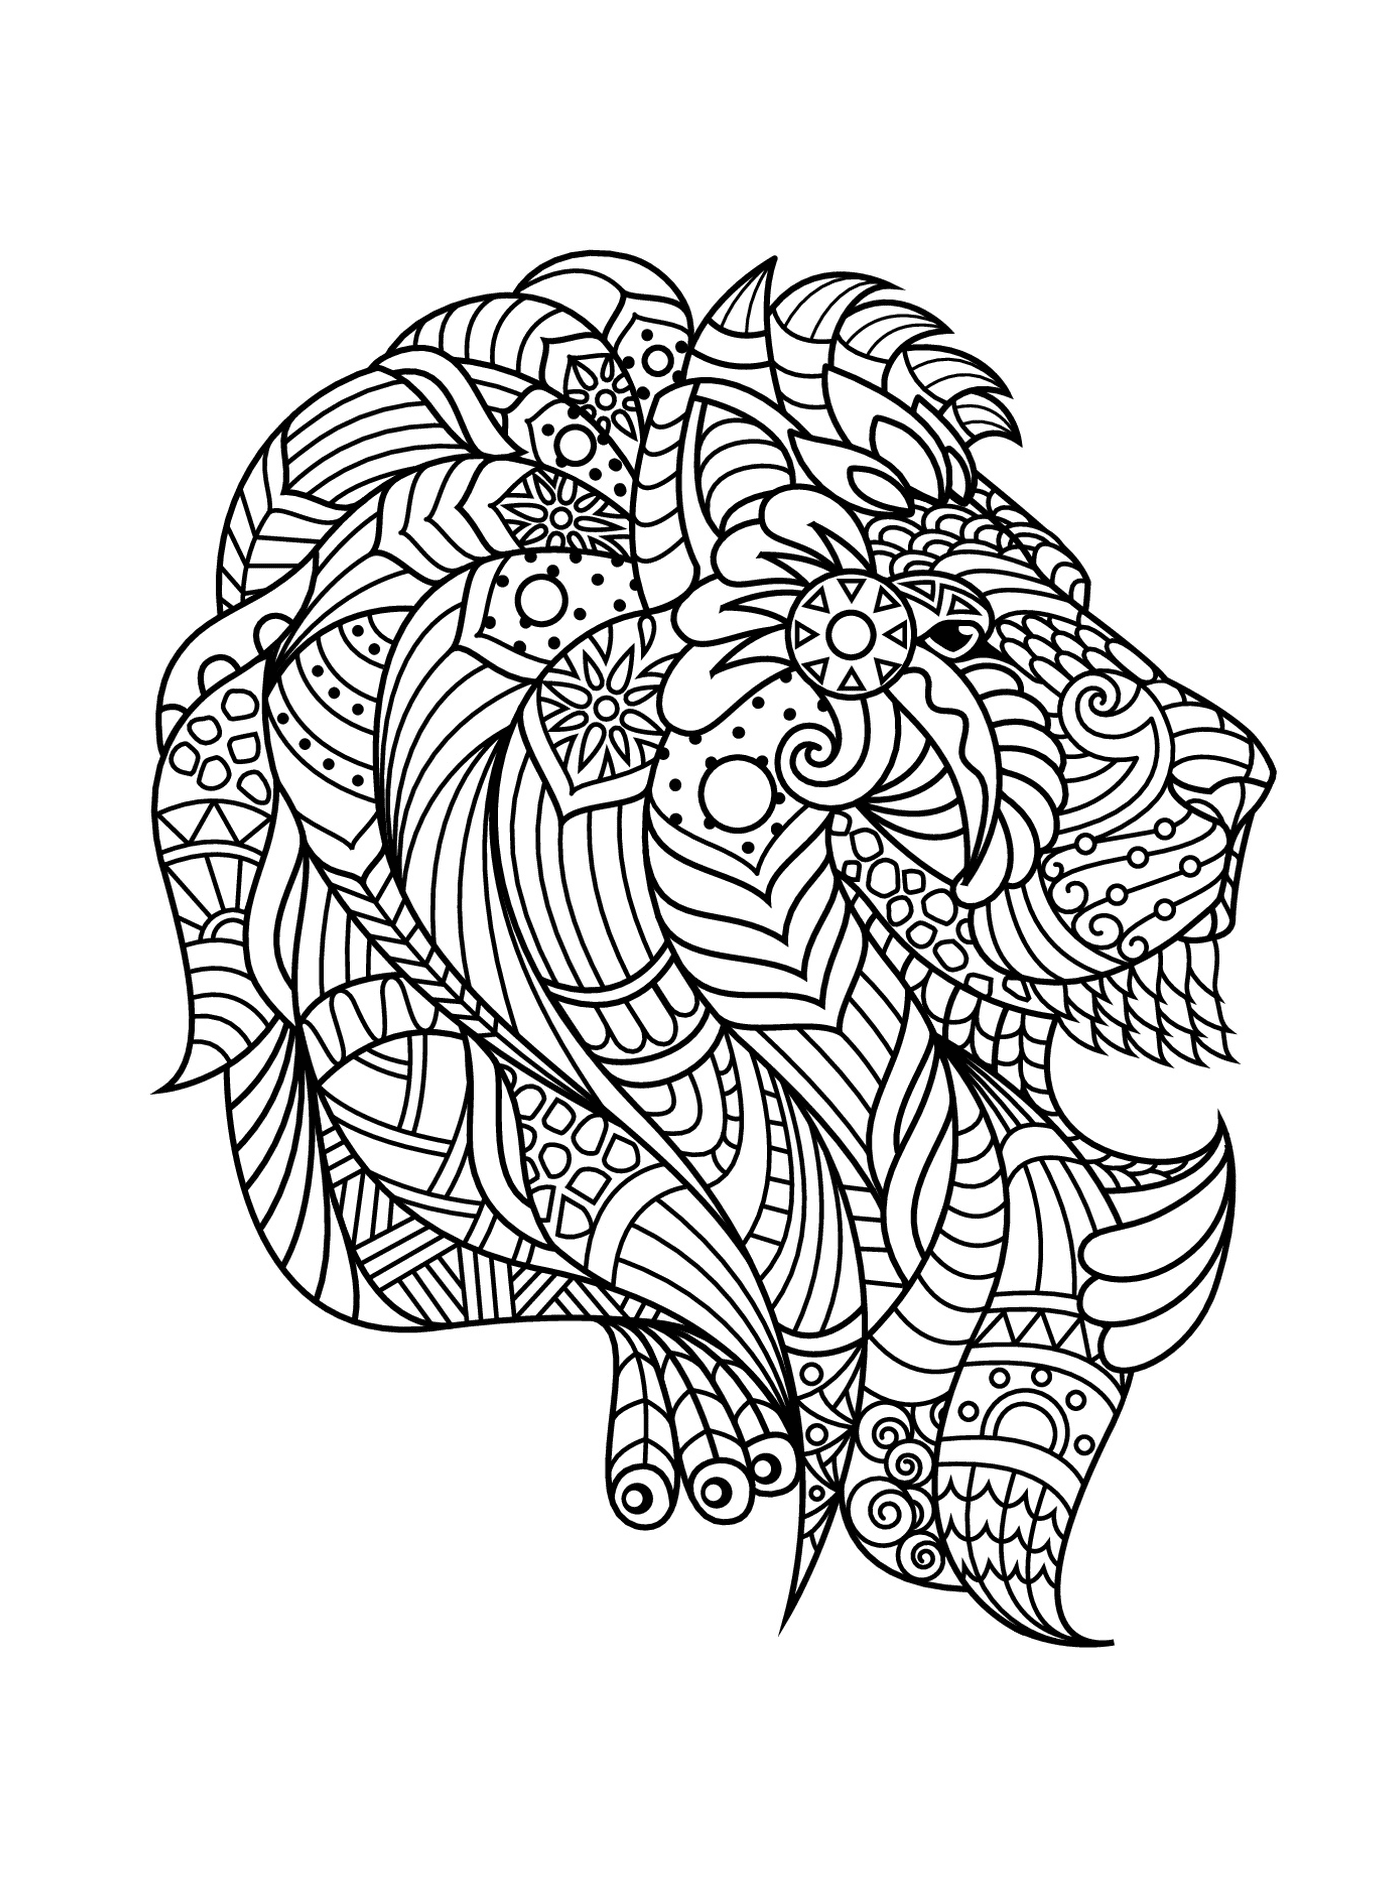  Leão adulto complexo zentangle 